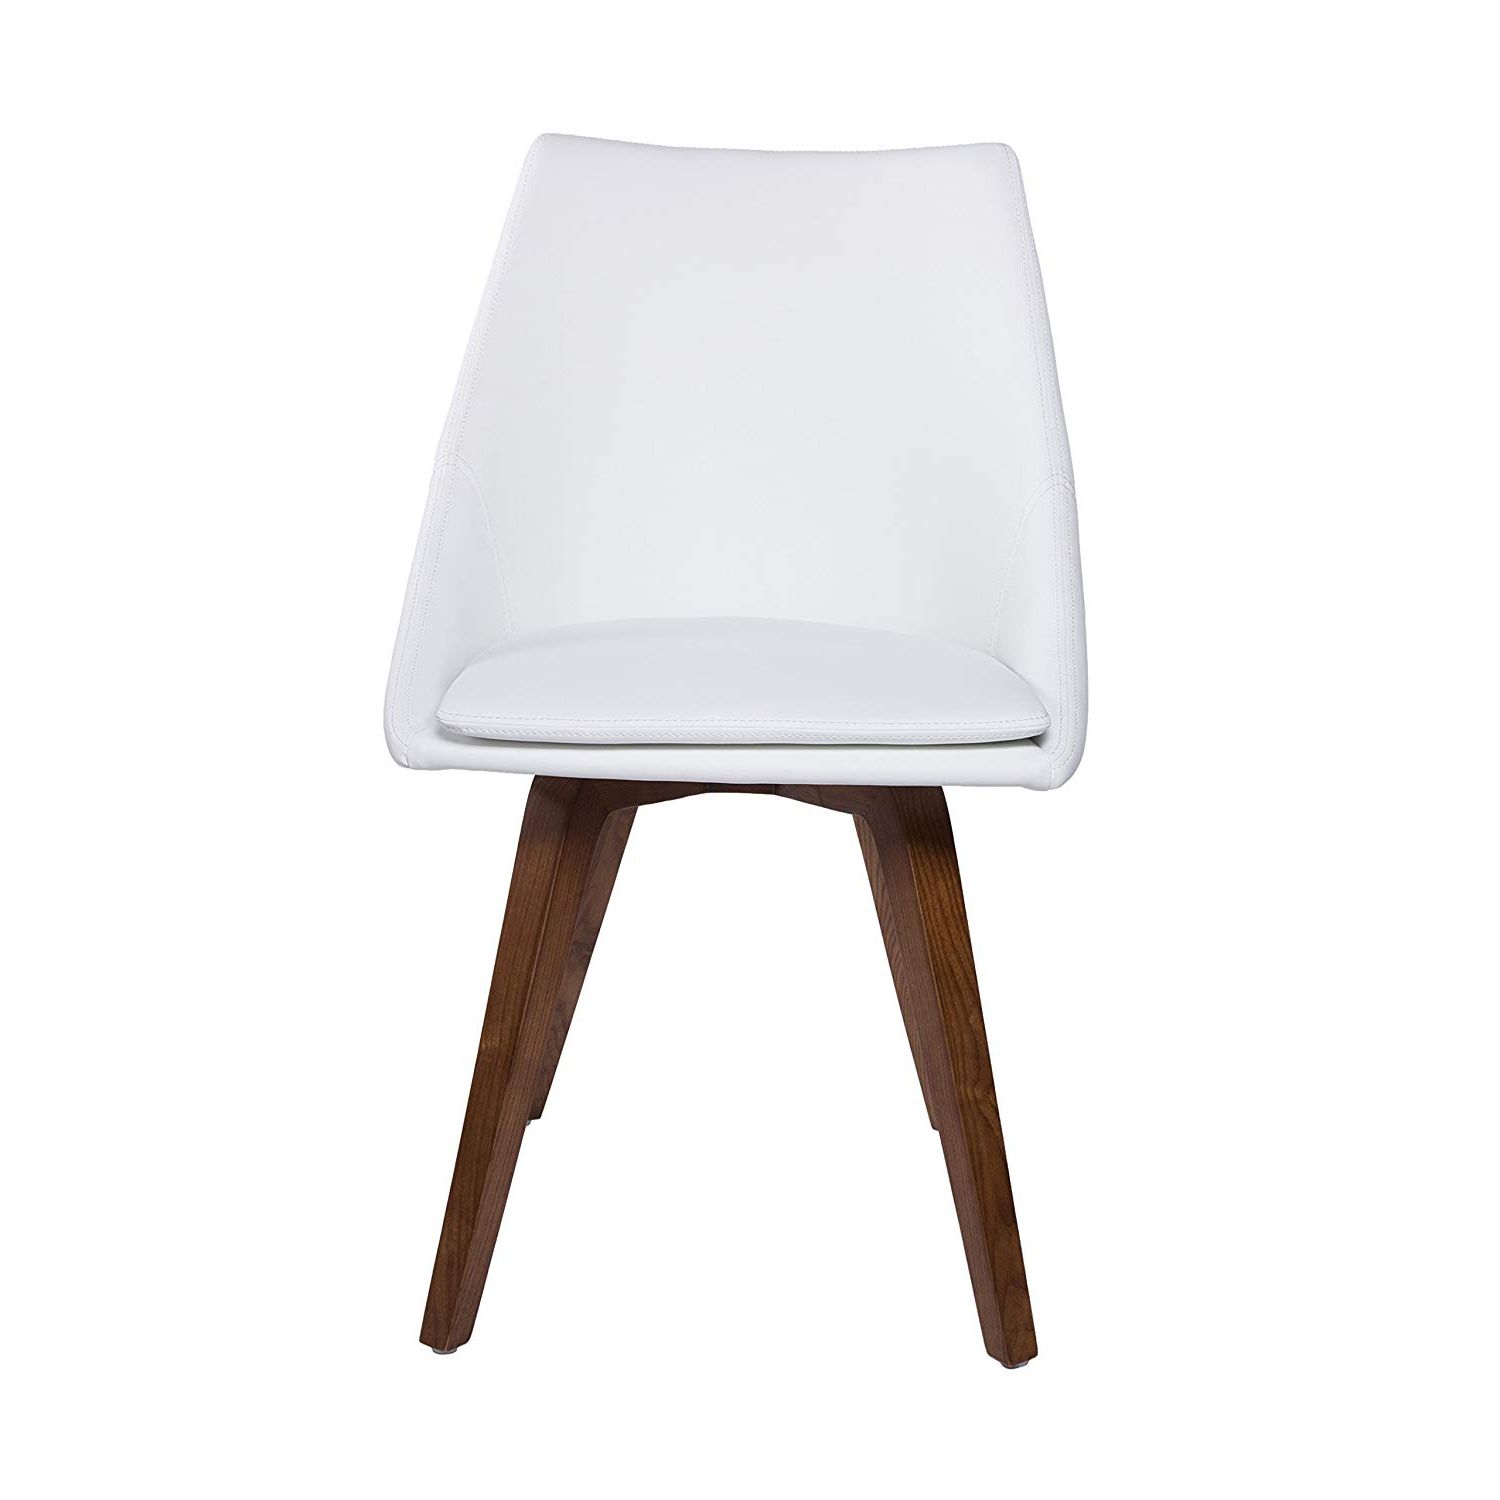 Calla 5 Piece Dining Sets Regarding Fashionable Amazon – Euro Style 02337wht Calla Dining Chair, White/walnut (View 18 of 20)